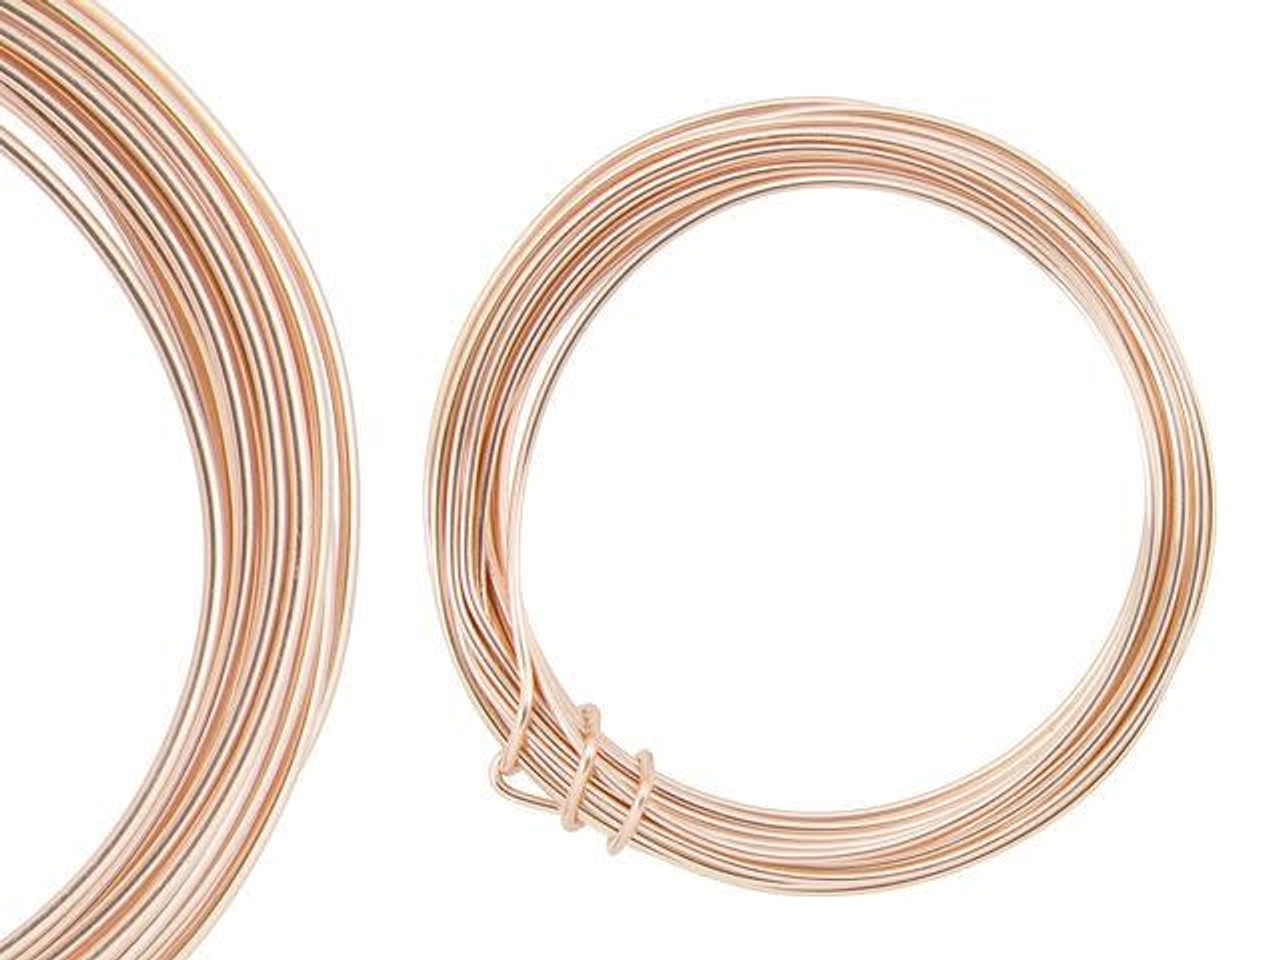 28 Gauge Wire for Making Jewelry, Round Non-tarnish Wire, Wire